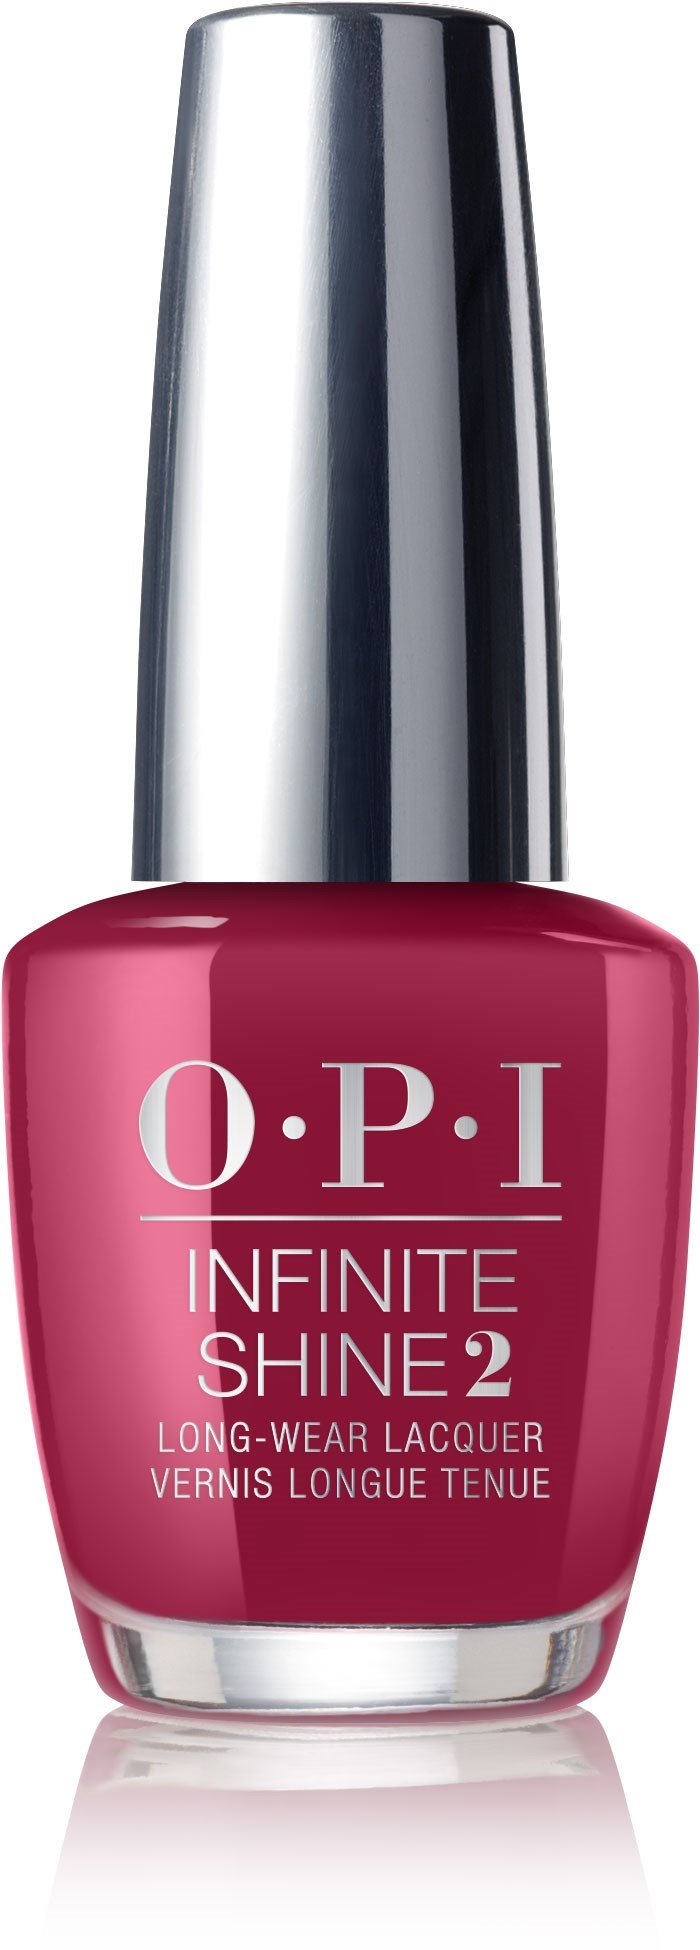 OPI Infinite Shine - OPI by Popular Vote